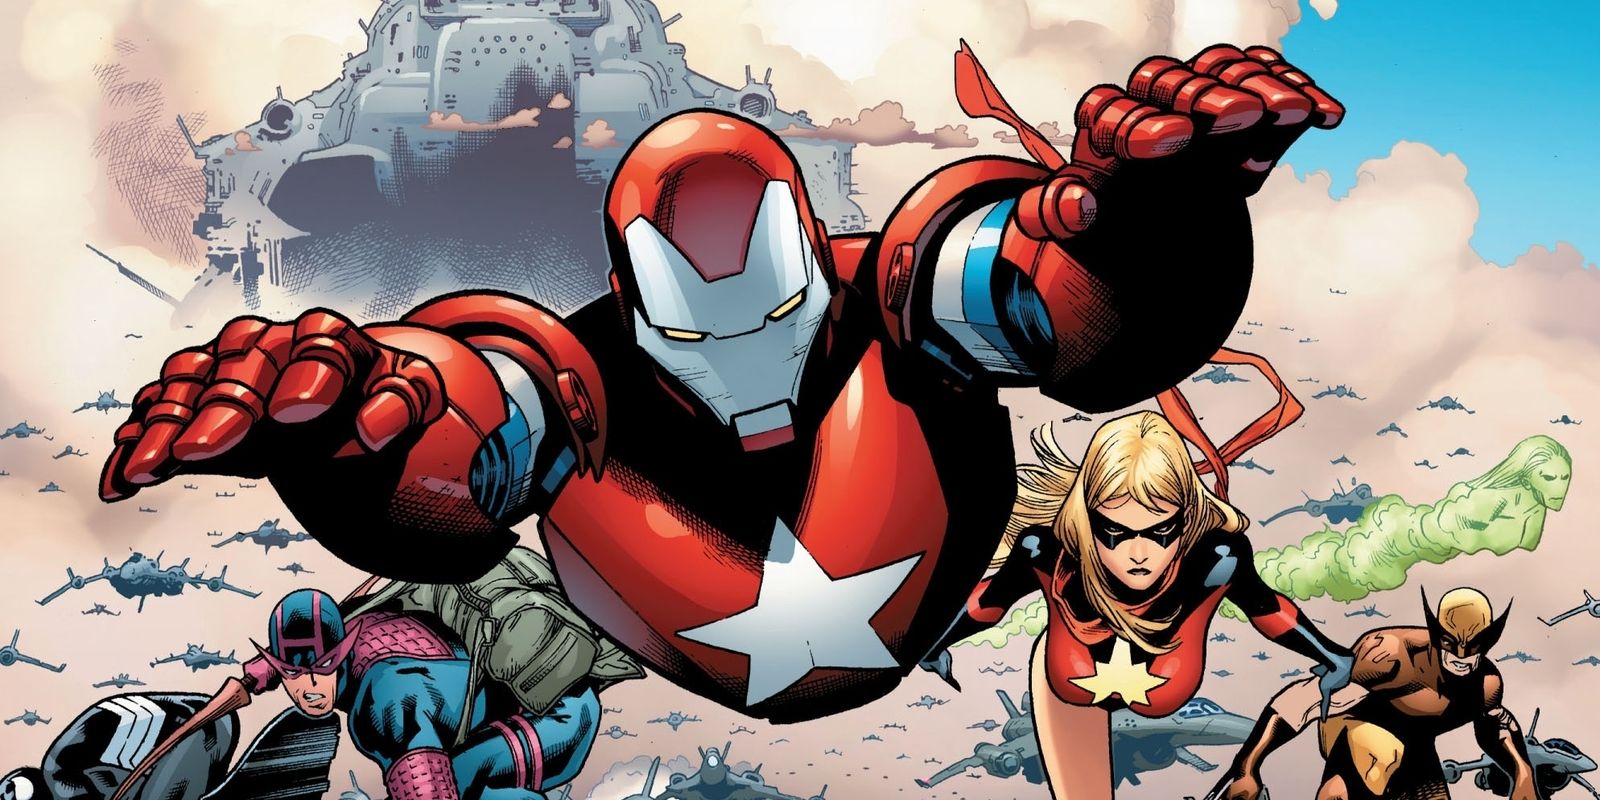 Iron Patriot leads the Dark Avengers, HAMMER, in Marvel Comics